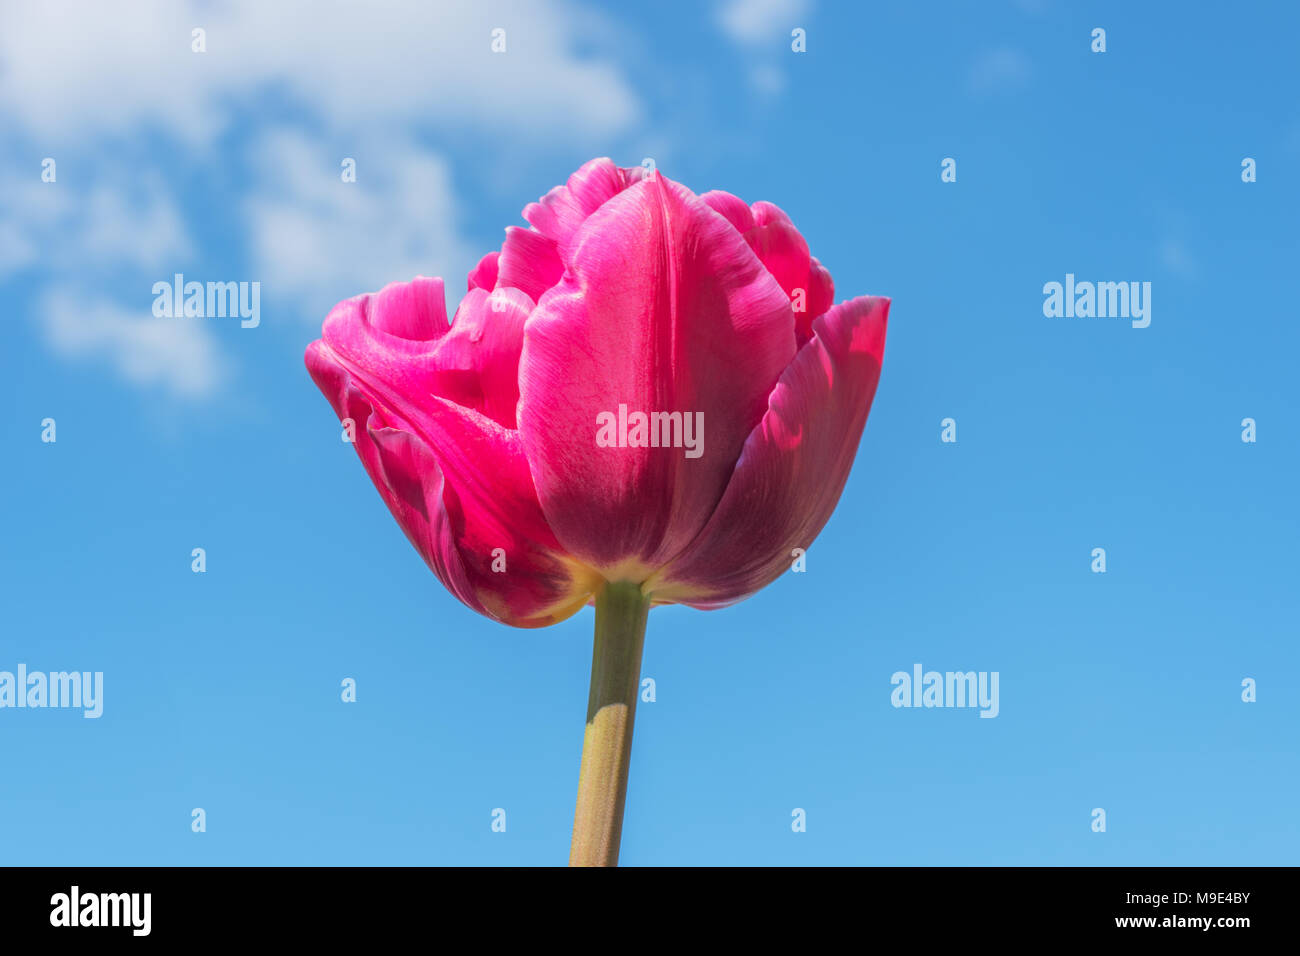 Blooming pink tulip flower close up on blue sky background, Keukenhof garden, Lisse, South Holland, Netherlands, Europe. Spring outdoor scenery. Flowe Stock Photo